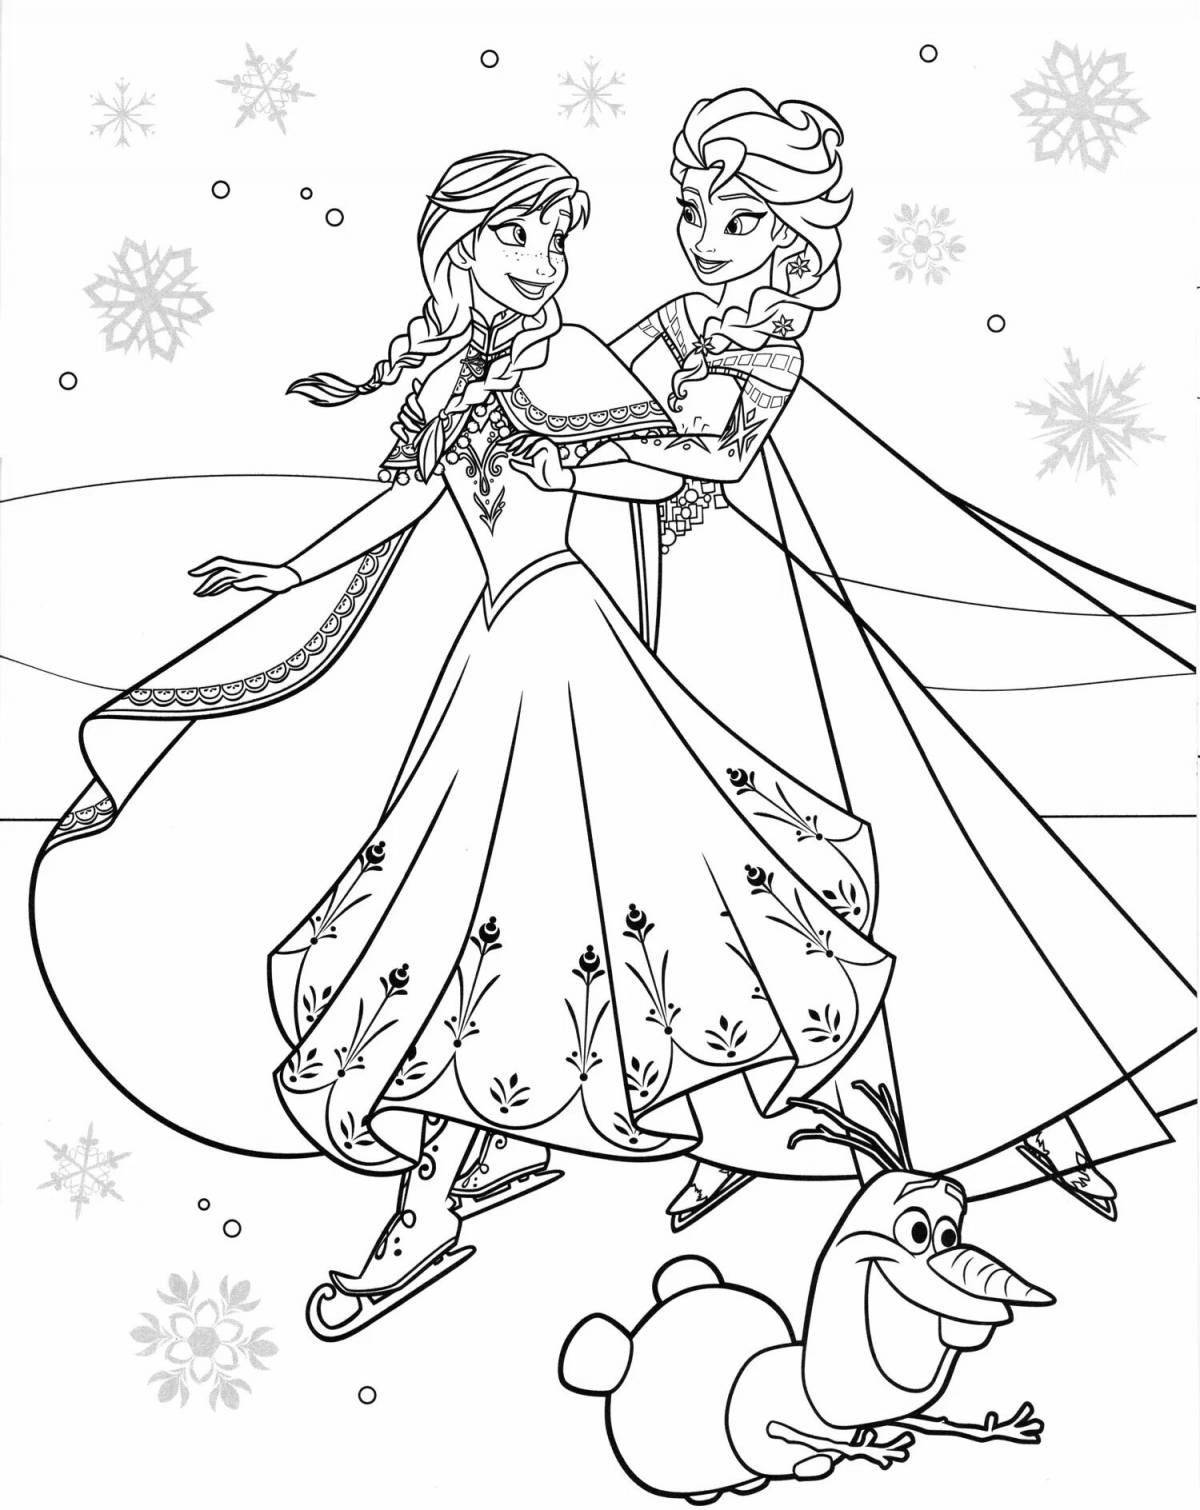 Elsa drawing #3